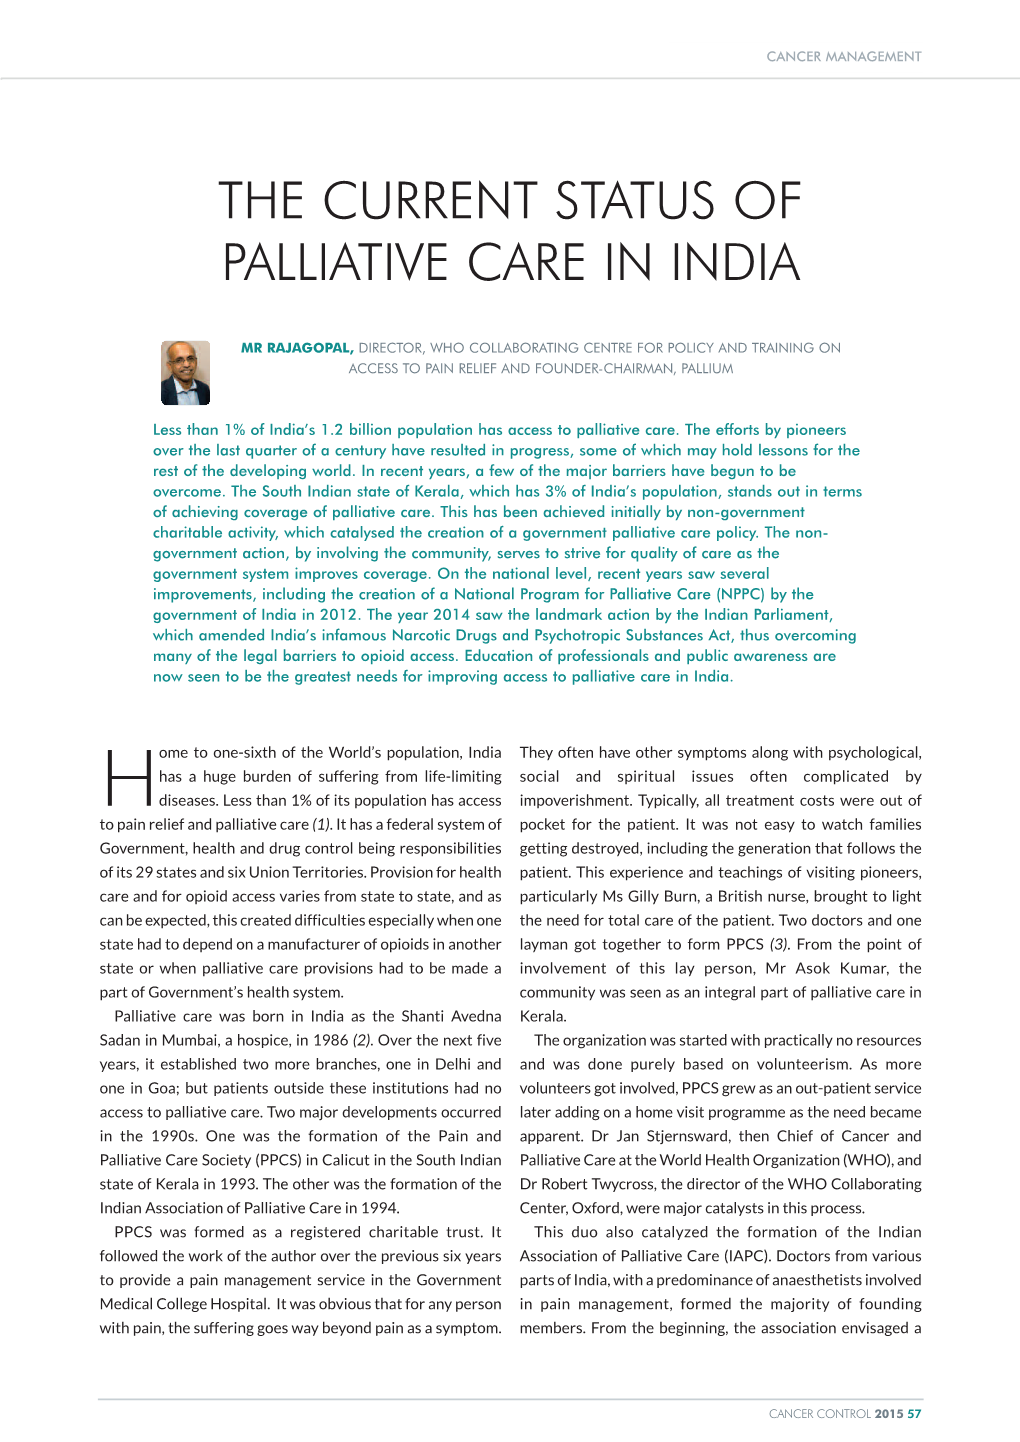 The Current Status of Palliative Care in India